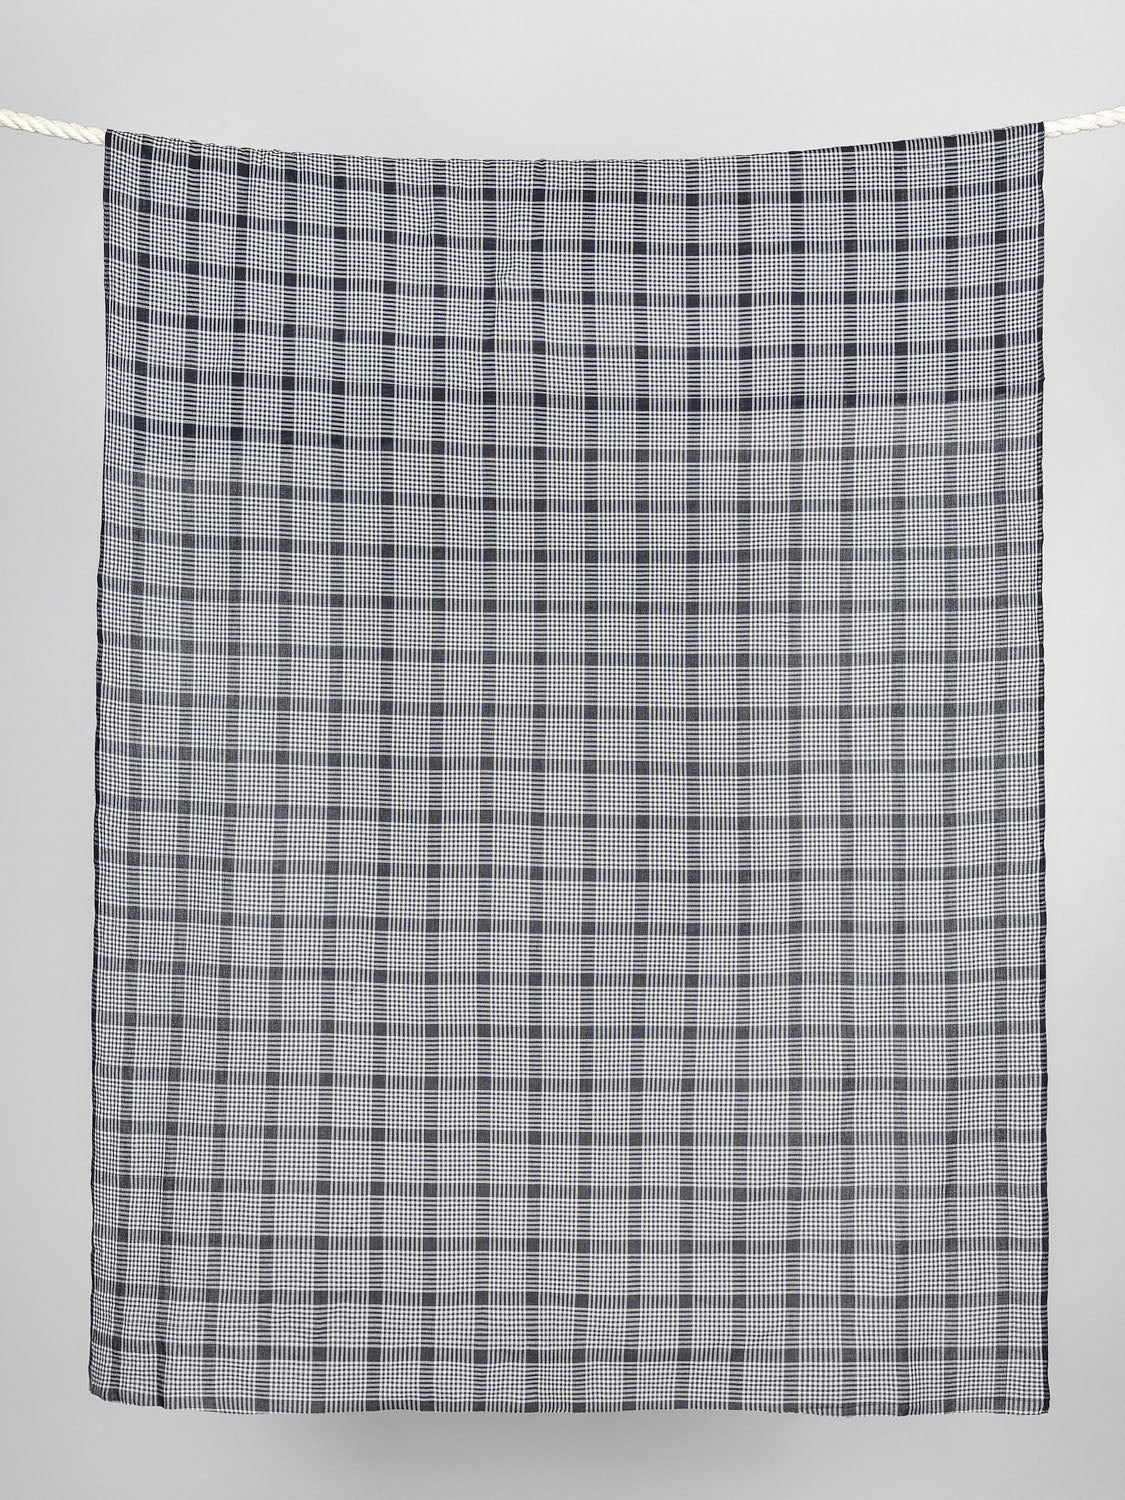 100% Cotton Yarn Dyed Fabric - Classic Checkerd Pattern, Charcoal